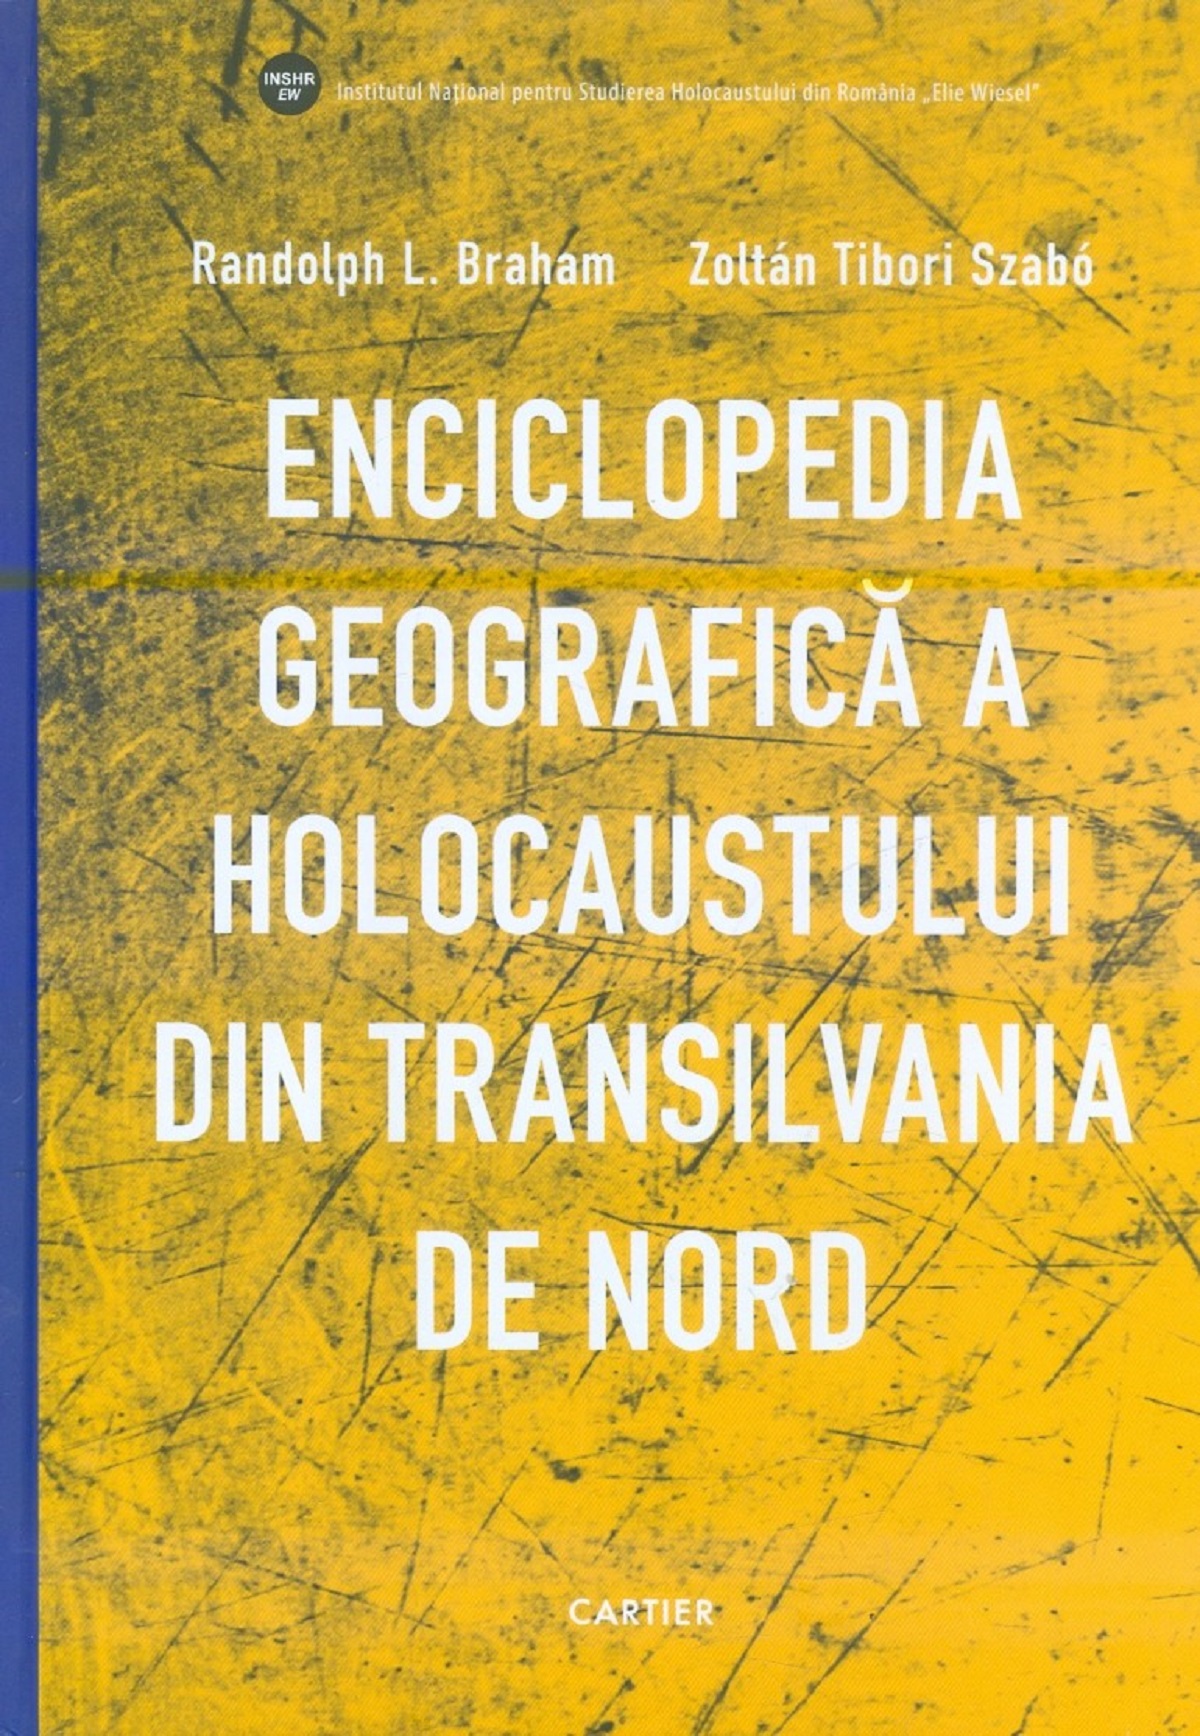 Enciclopedia geografica a Holocaustului din Transilvania de Nord - Randolph L. Braham, Zoltan Tibori Szabo